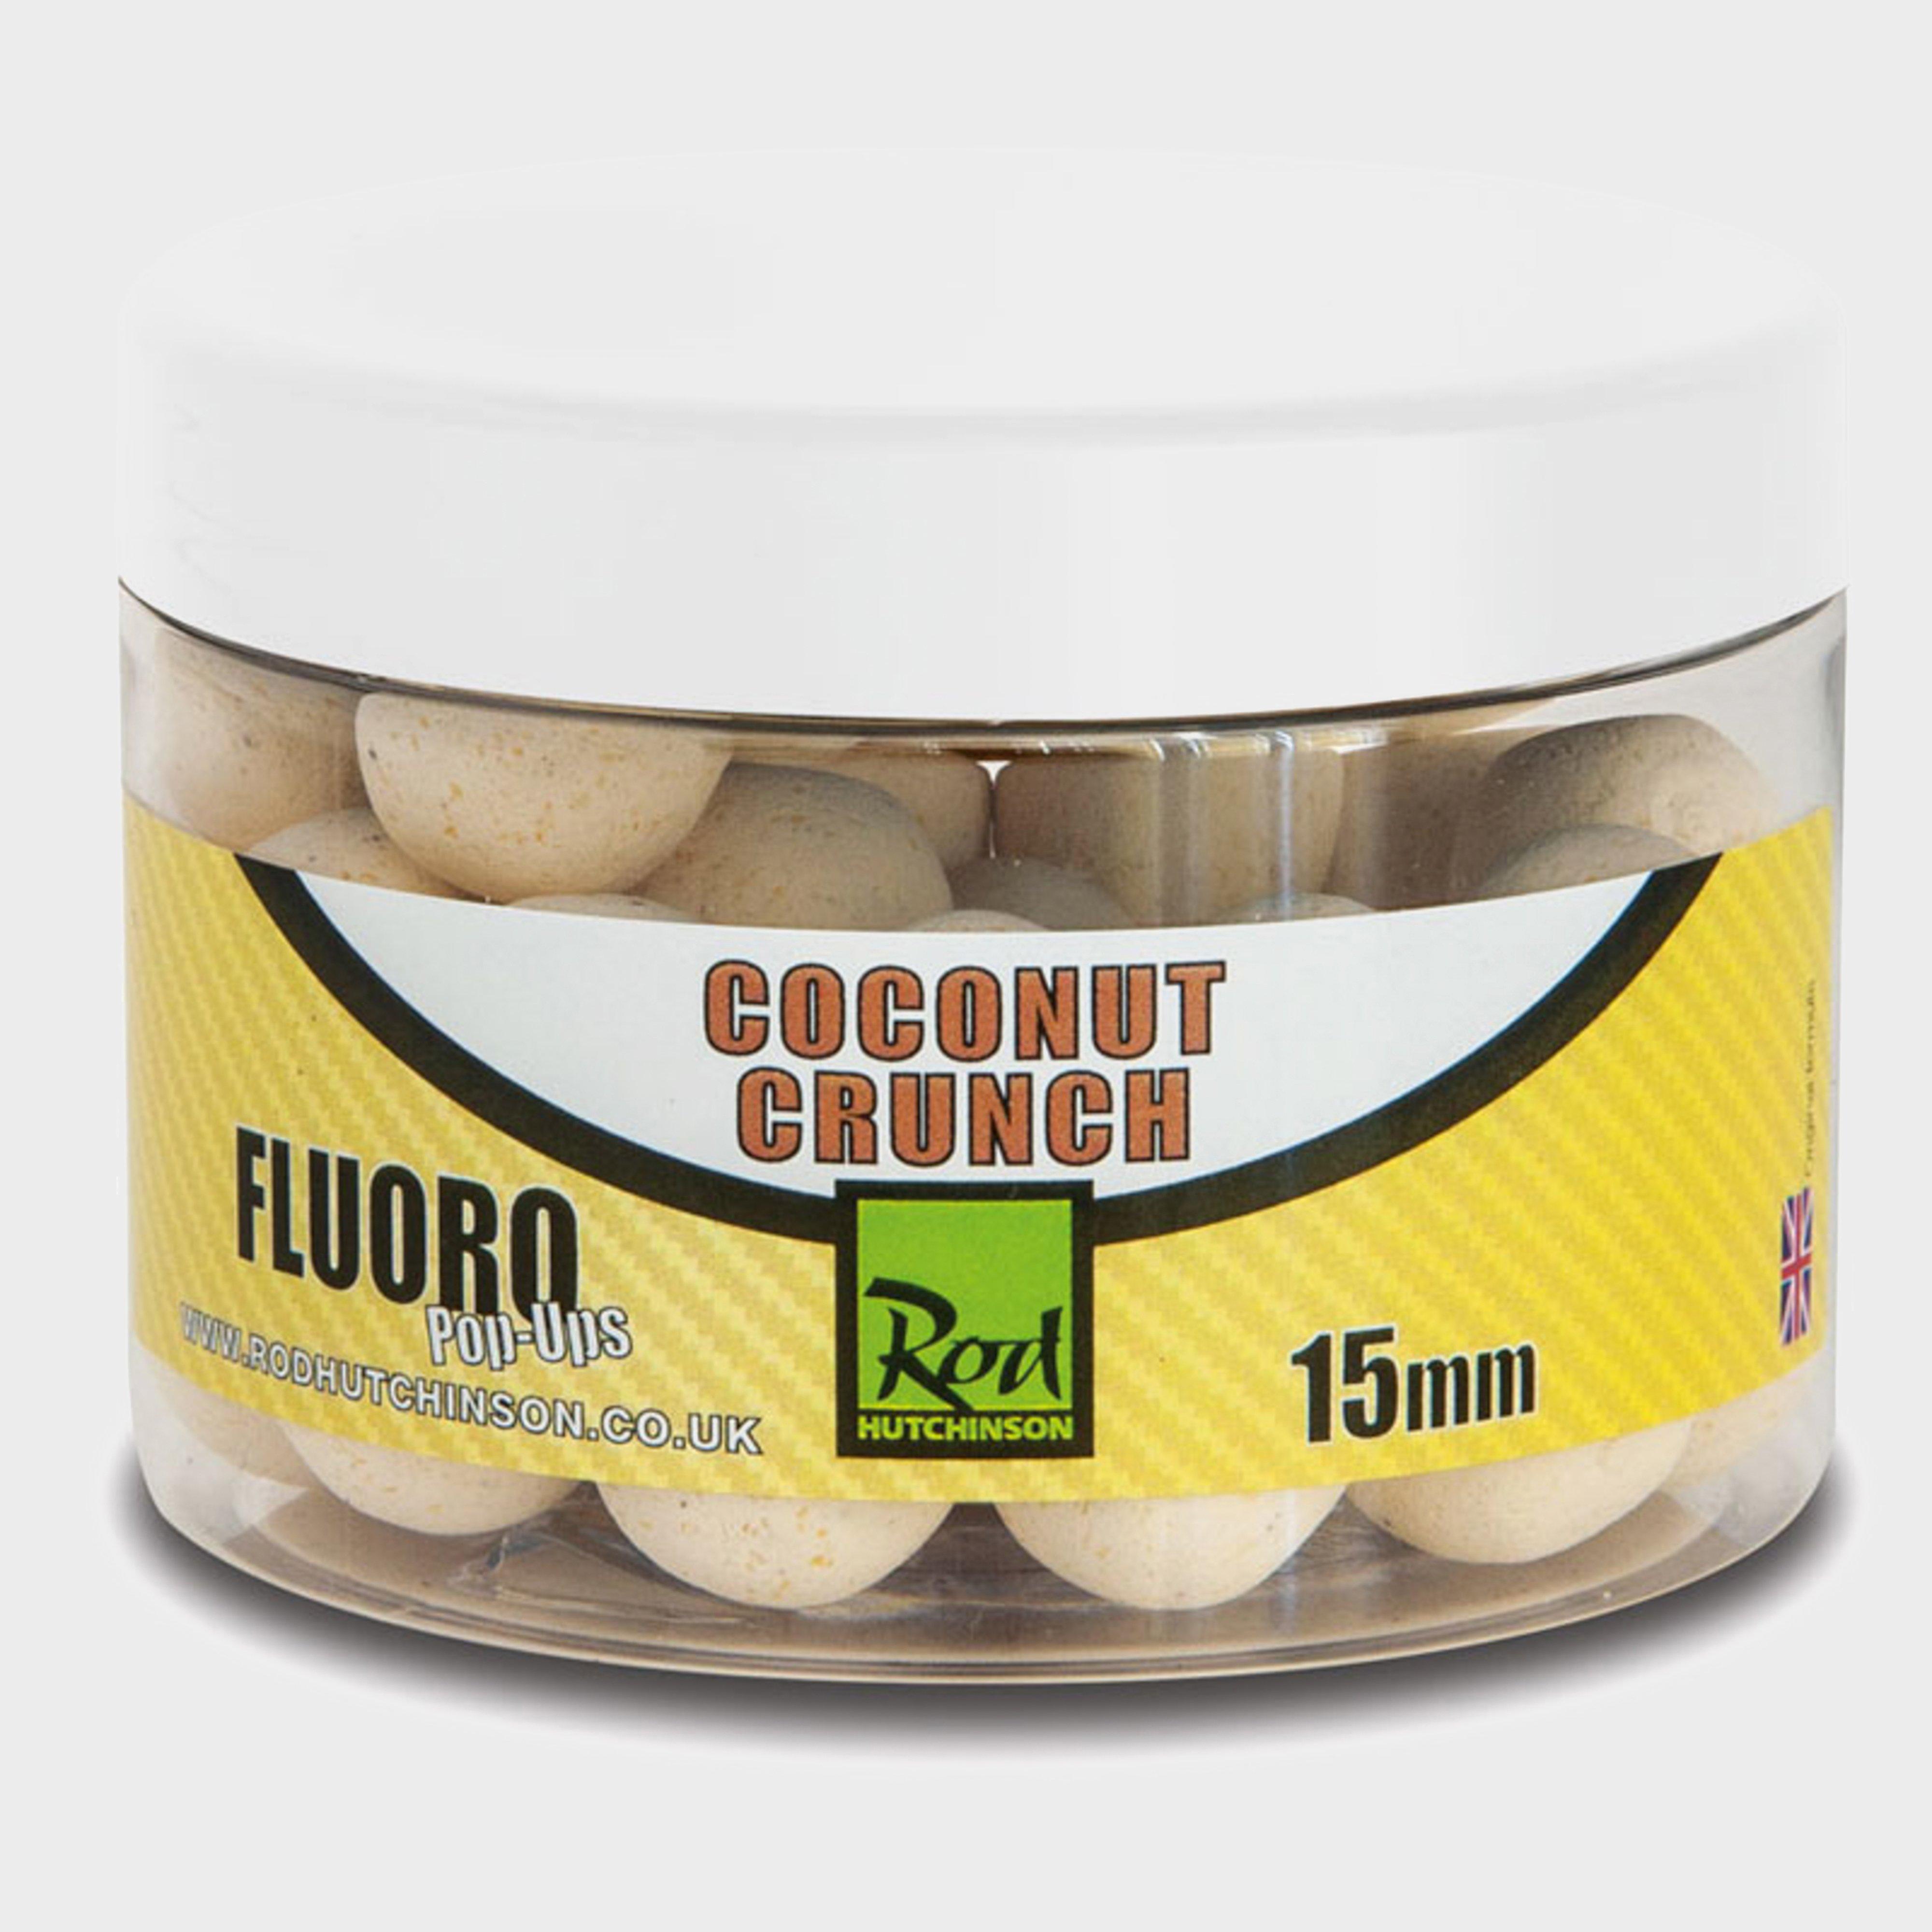 R Hutchinson Fluoro Pop Ups 15mm  Coconut Crunch - Multi/crunch  Multi/crunch